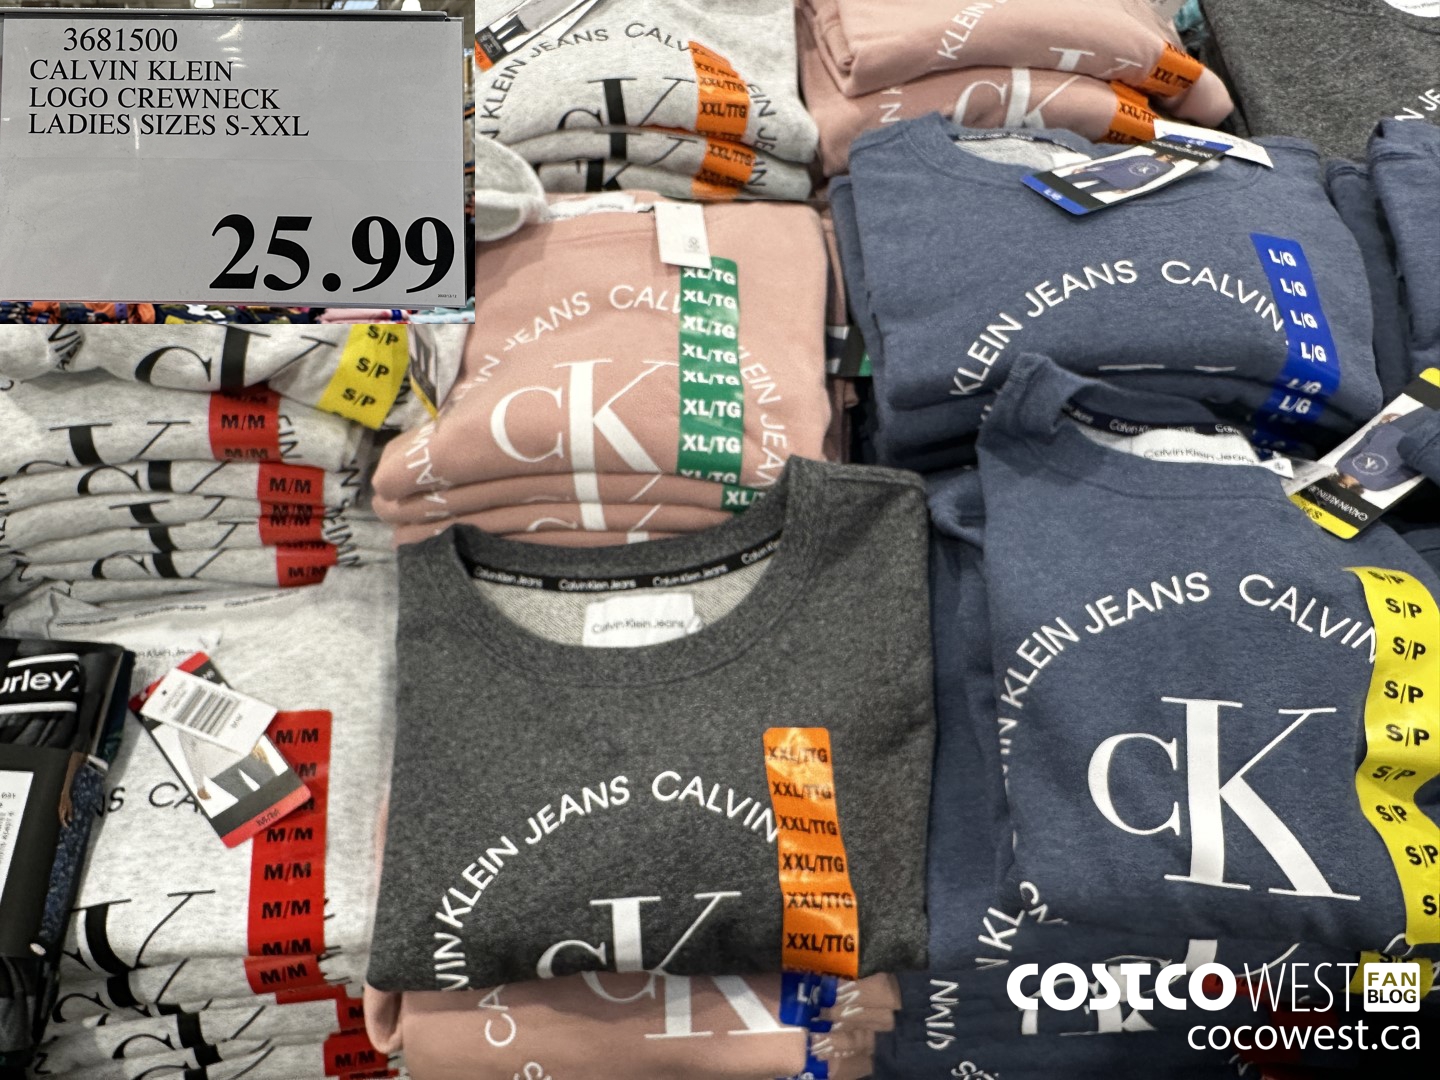 Costco] Calvin Klein's throws  Queen: $22 or King: $23 - RedFlagDeals.com  Forums